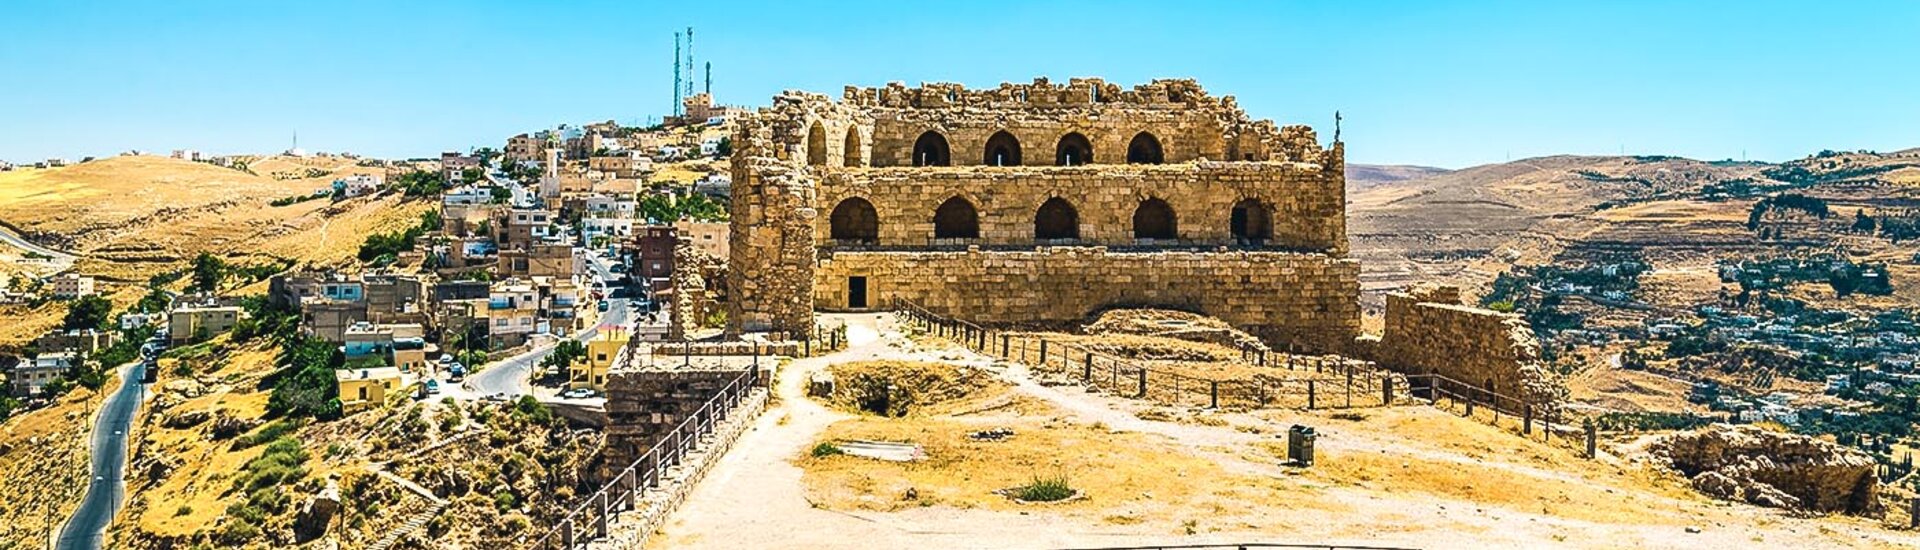 Burgruine von Kerak in Jordanien